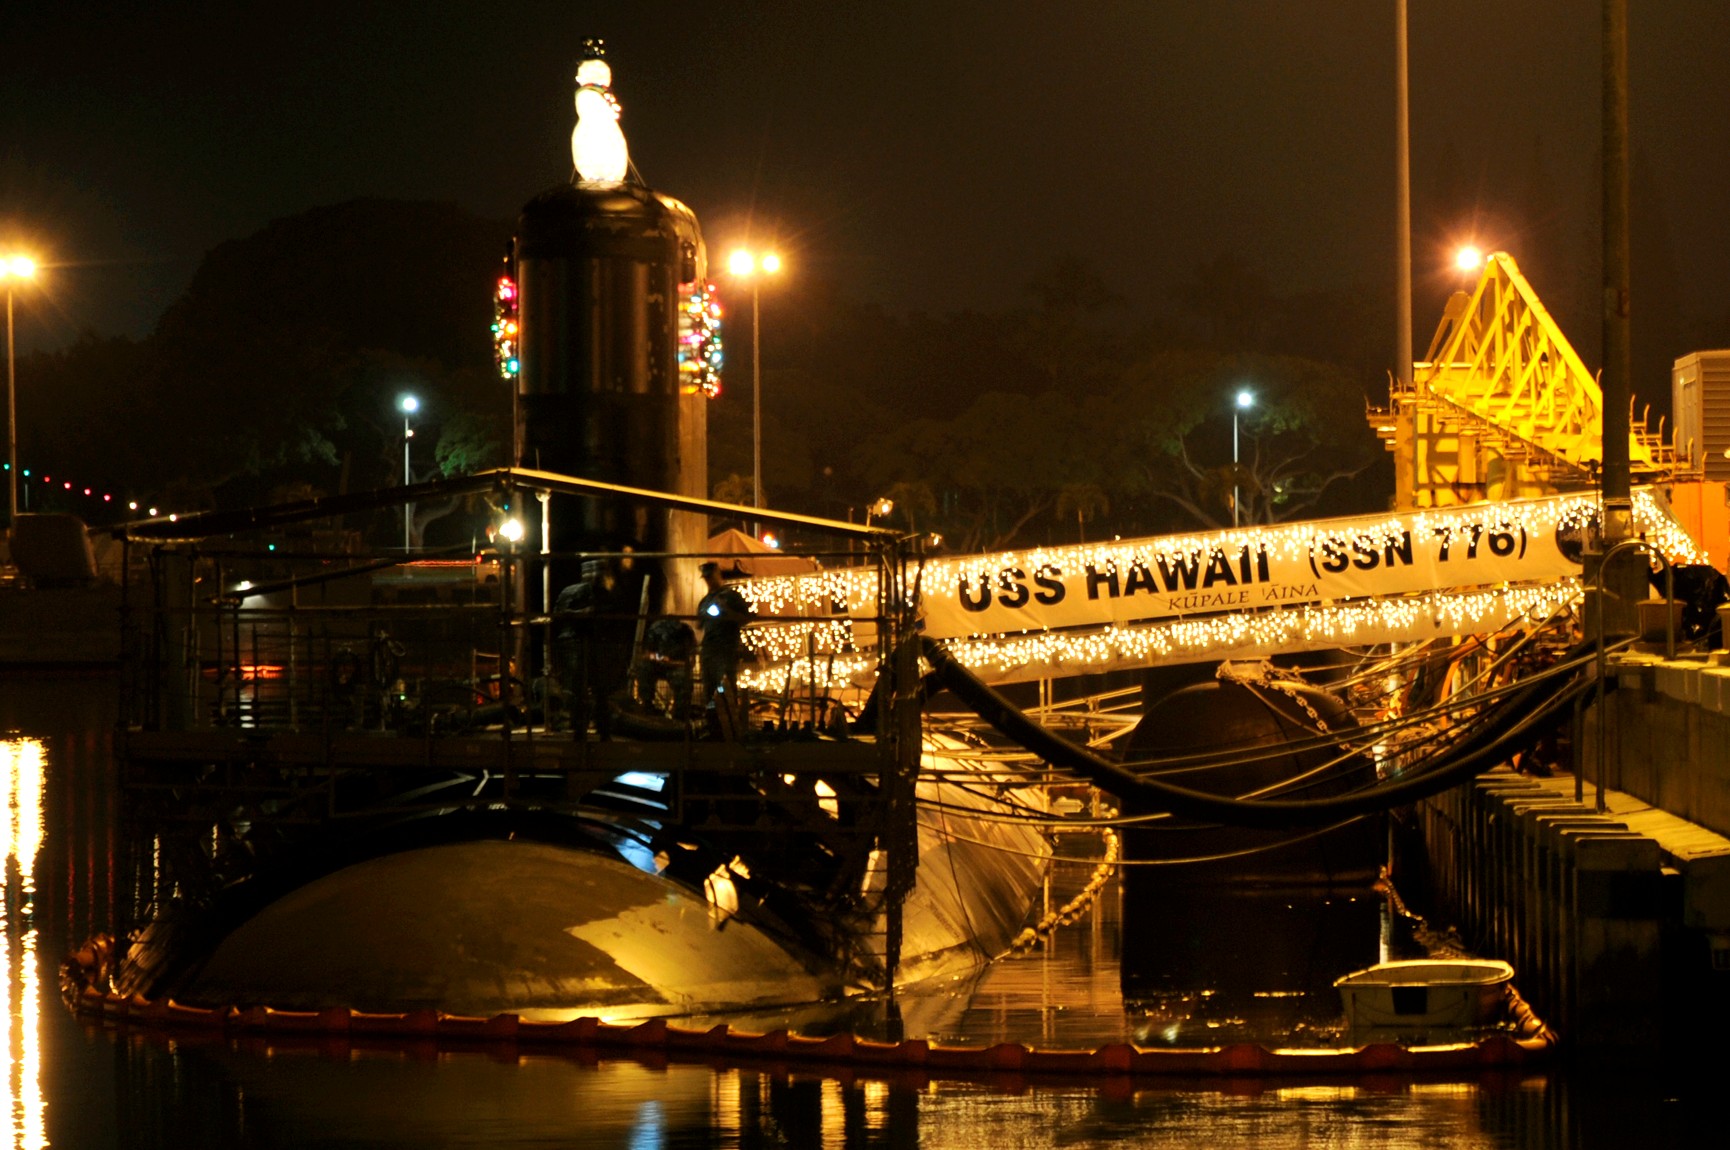 ssn-776 uss hawaii virginia class attack submarine us navy 2009 29